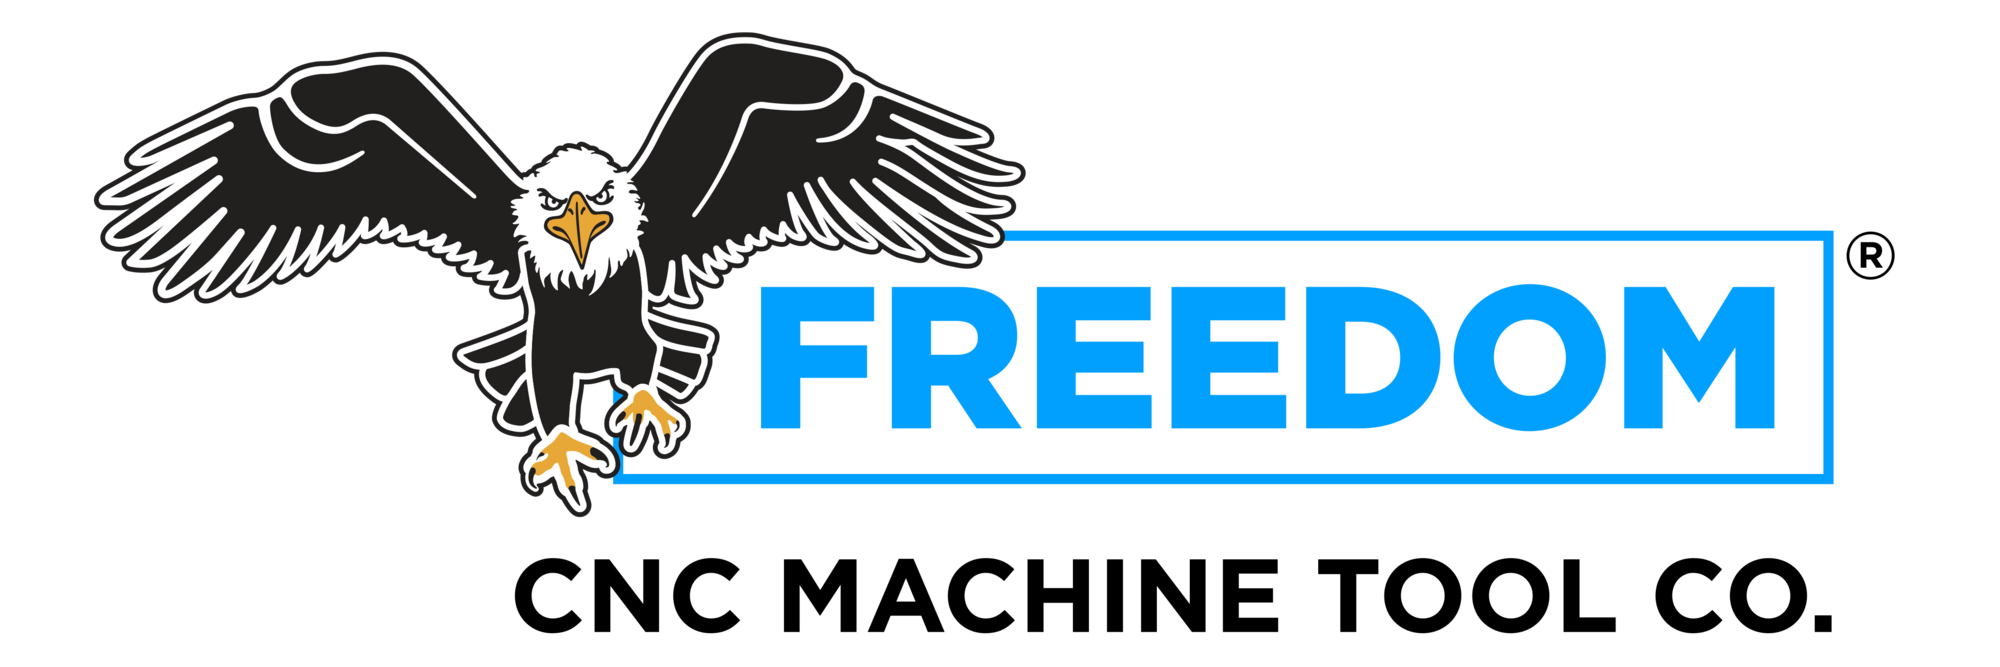 Freedom CNC Machine Tool Co. Logo